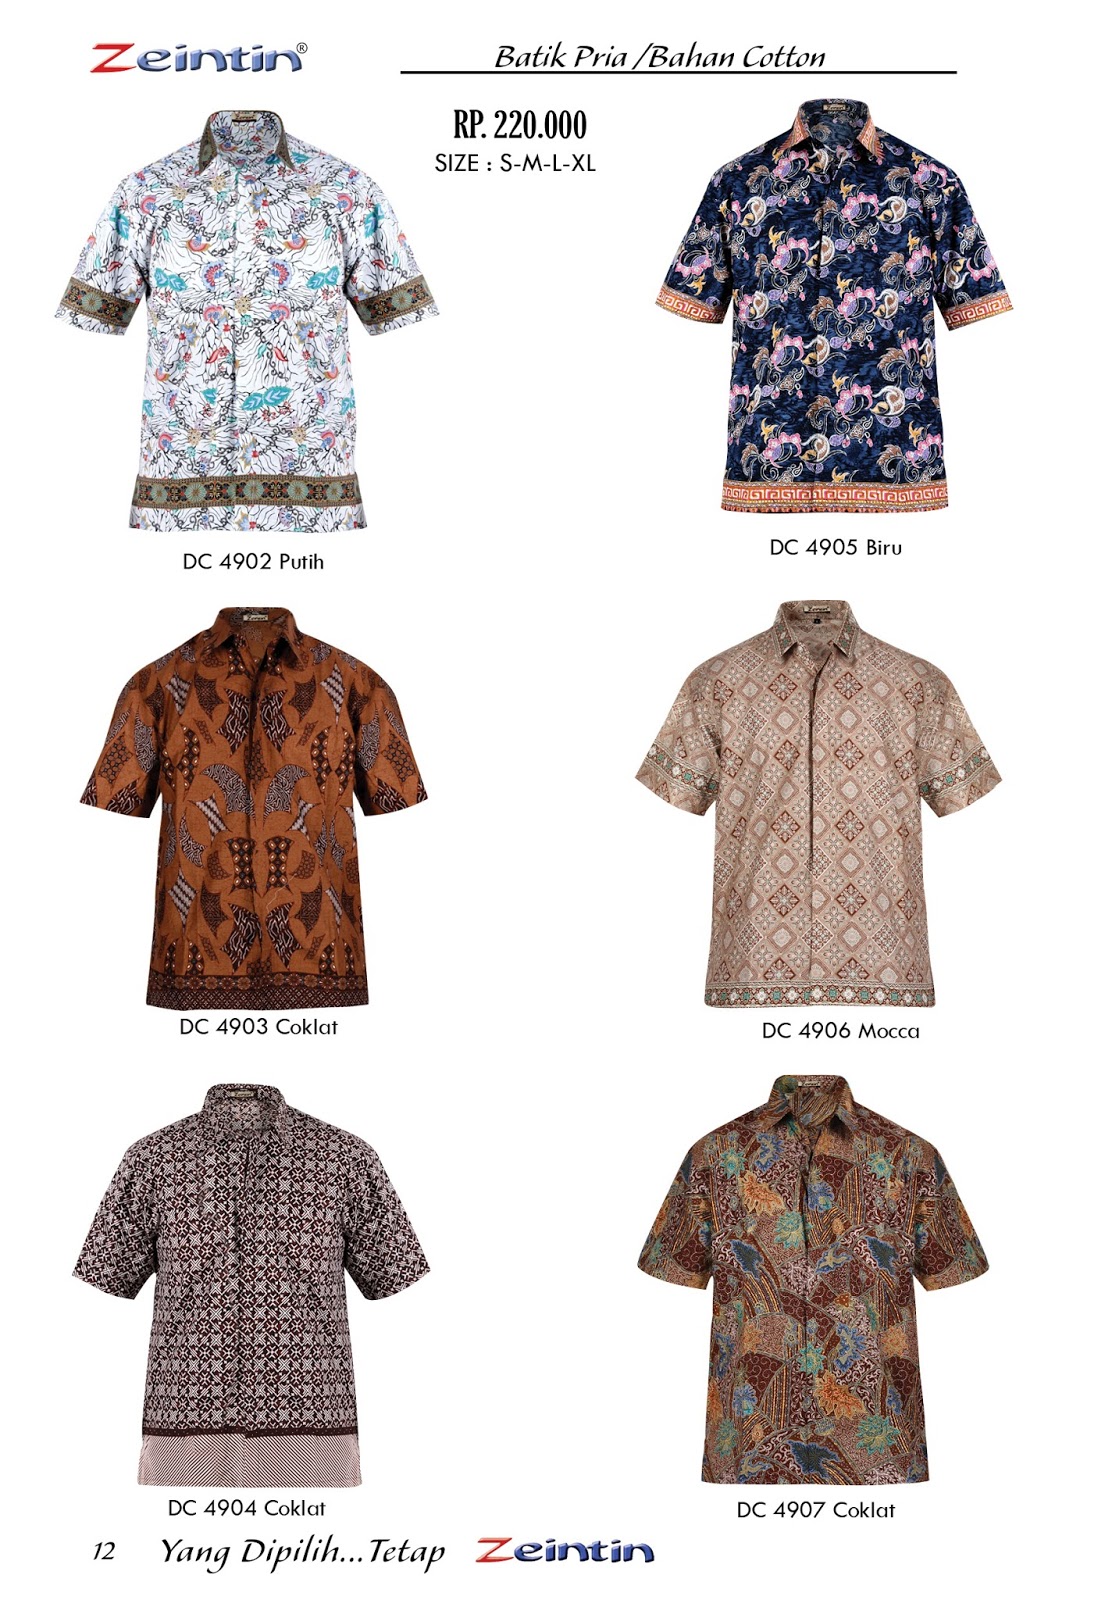  Baju Batik Pria Bahan Cotton Online Mall Pakaian Indonesia